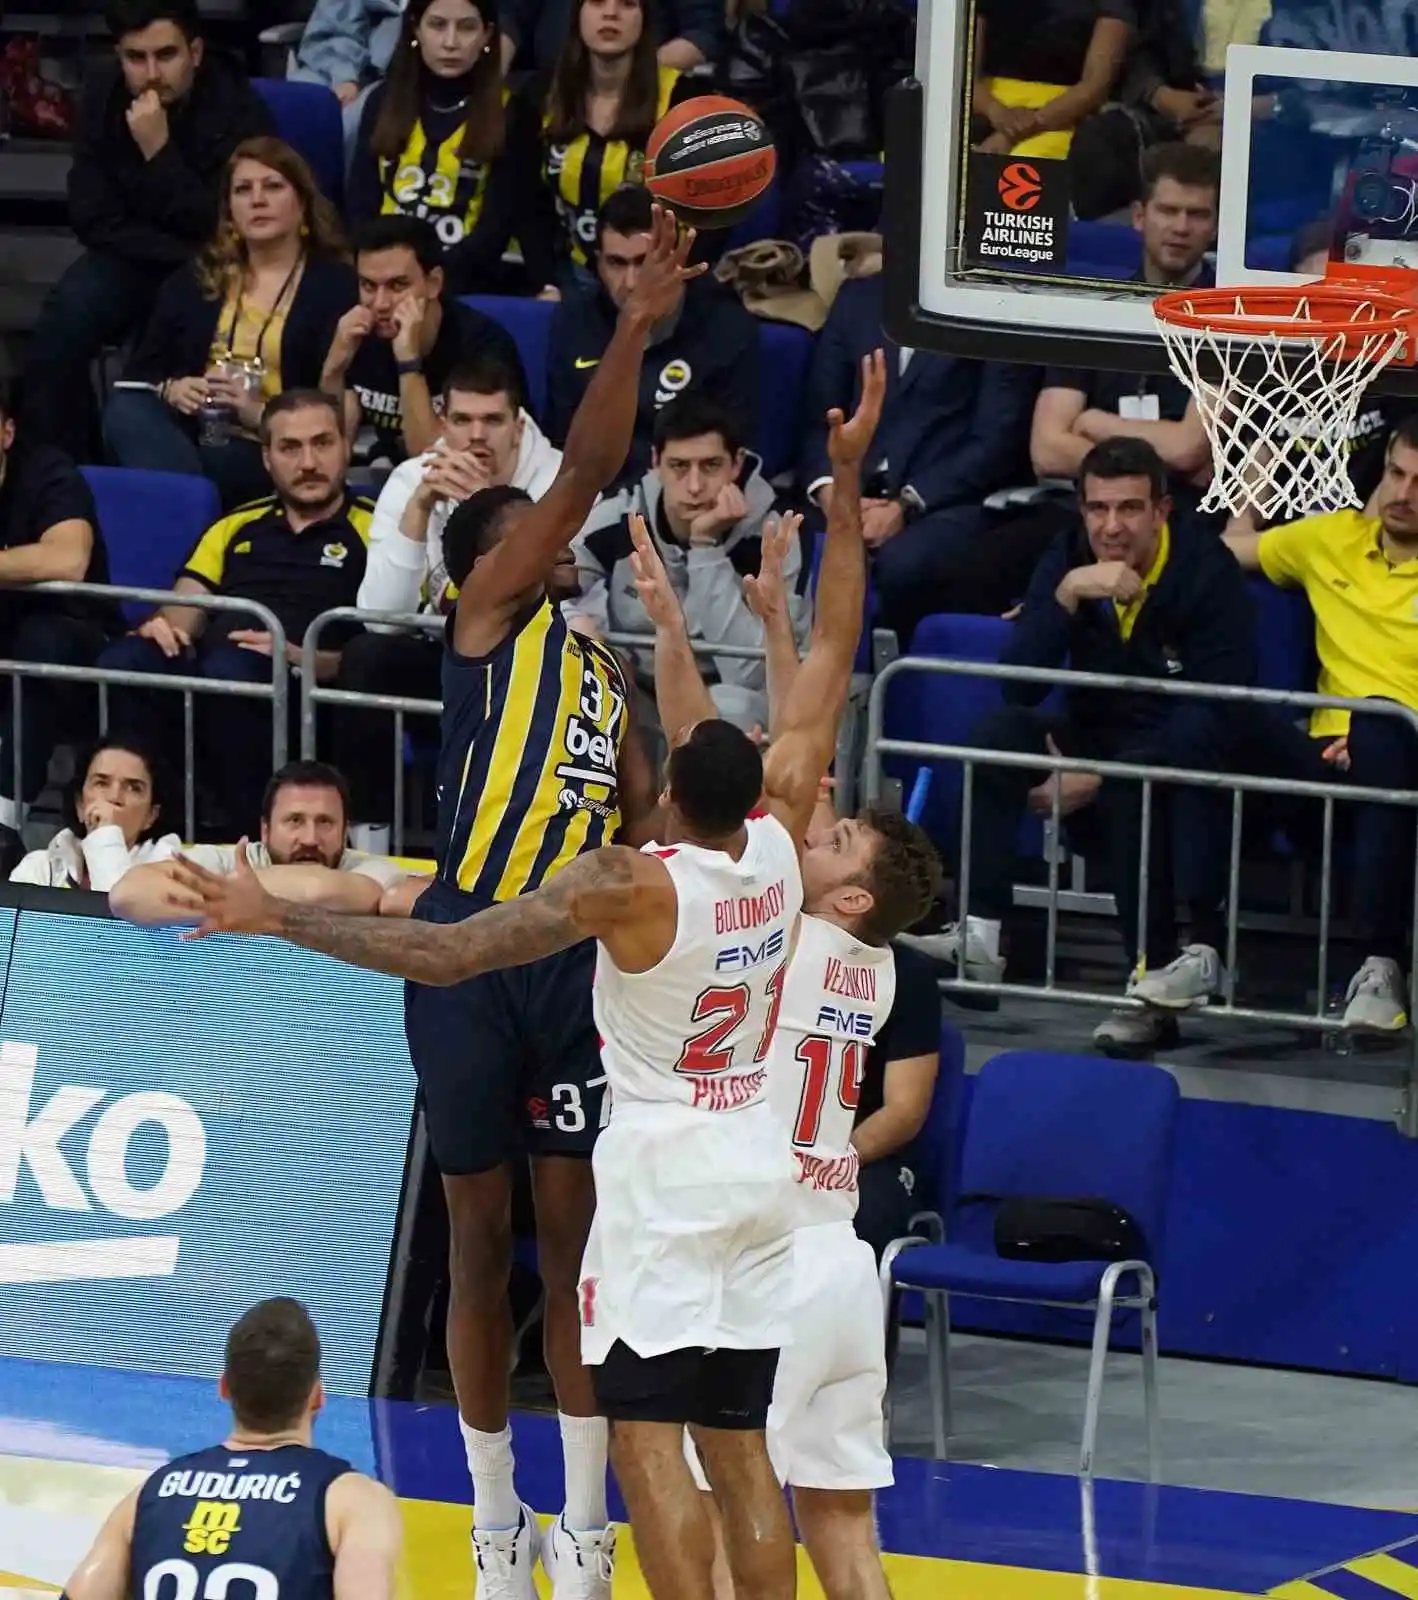 THY Euroleague: Fenerbahçe Beko: 73 - Olympiakos: 93
